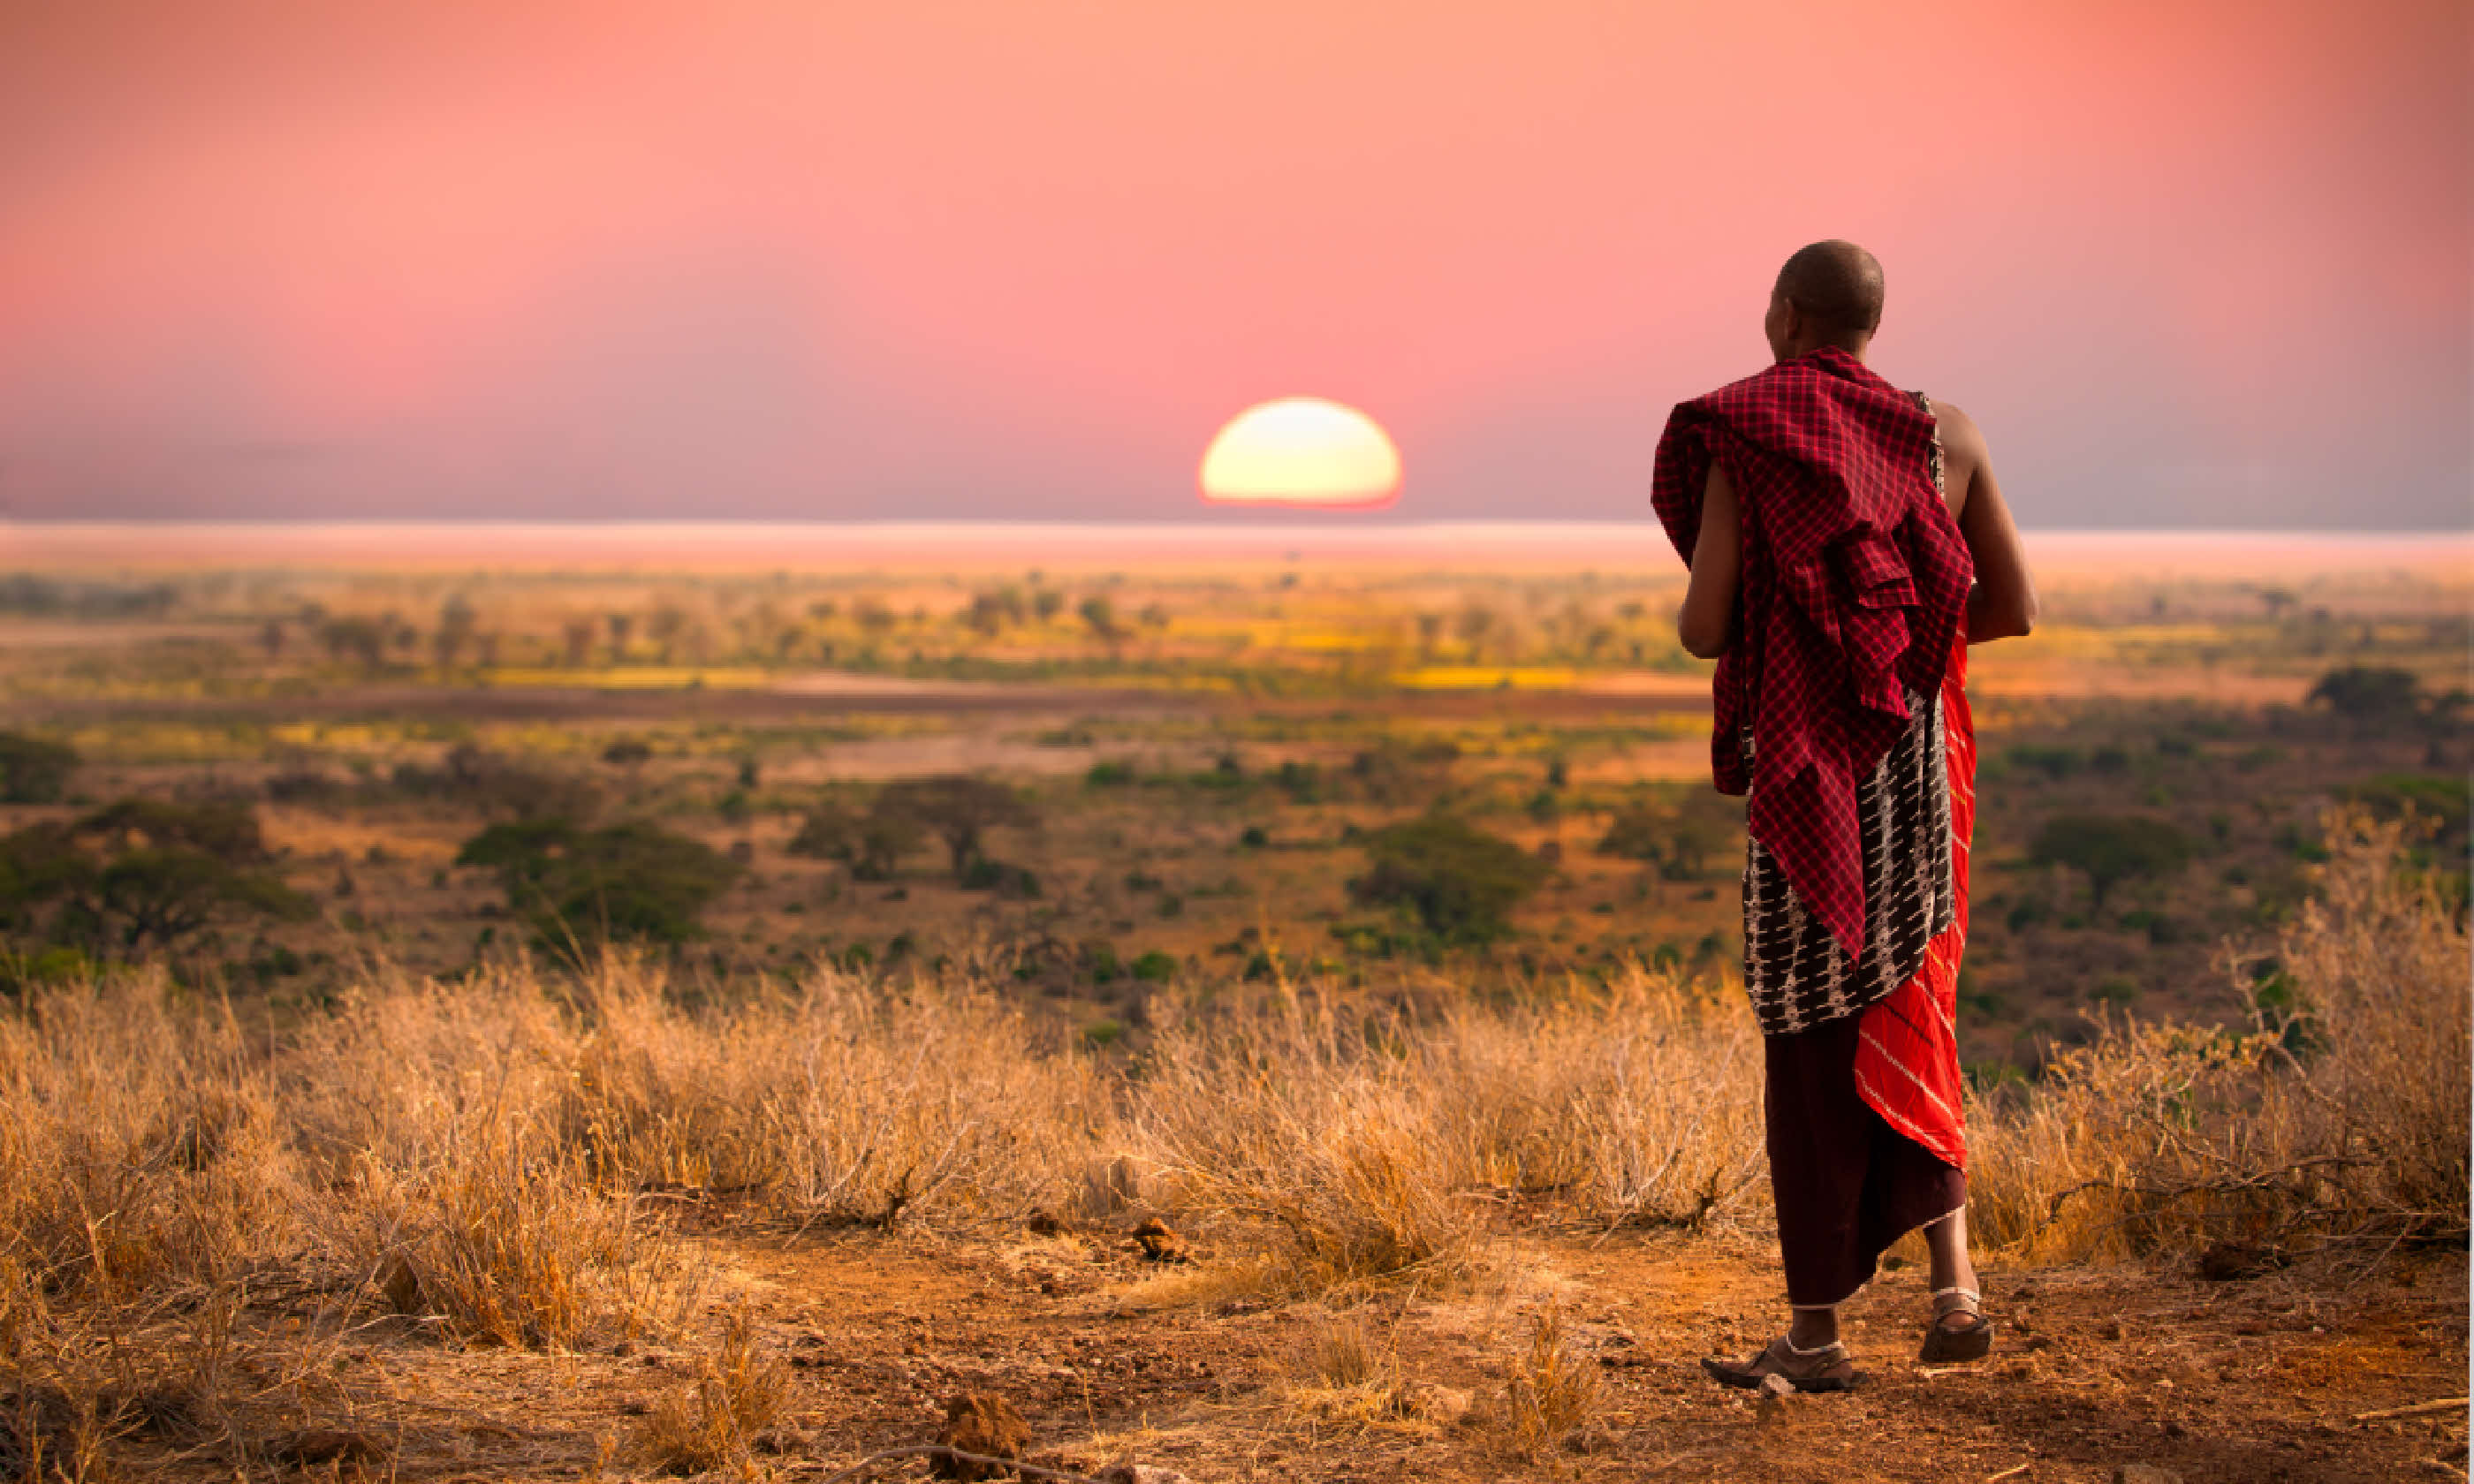 Serengeti, Tanzania (Shutterstock: see credit below)